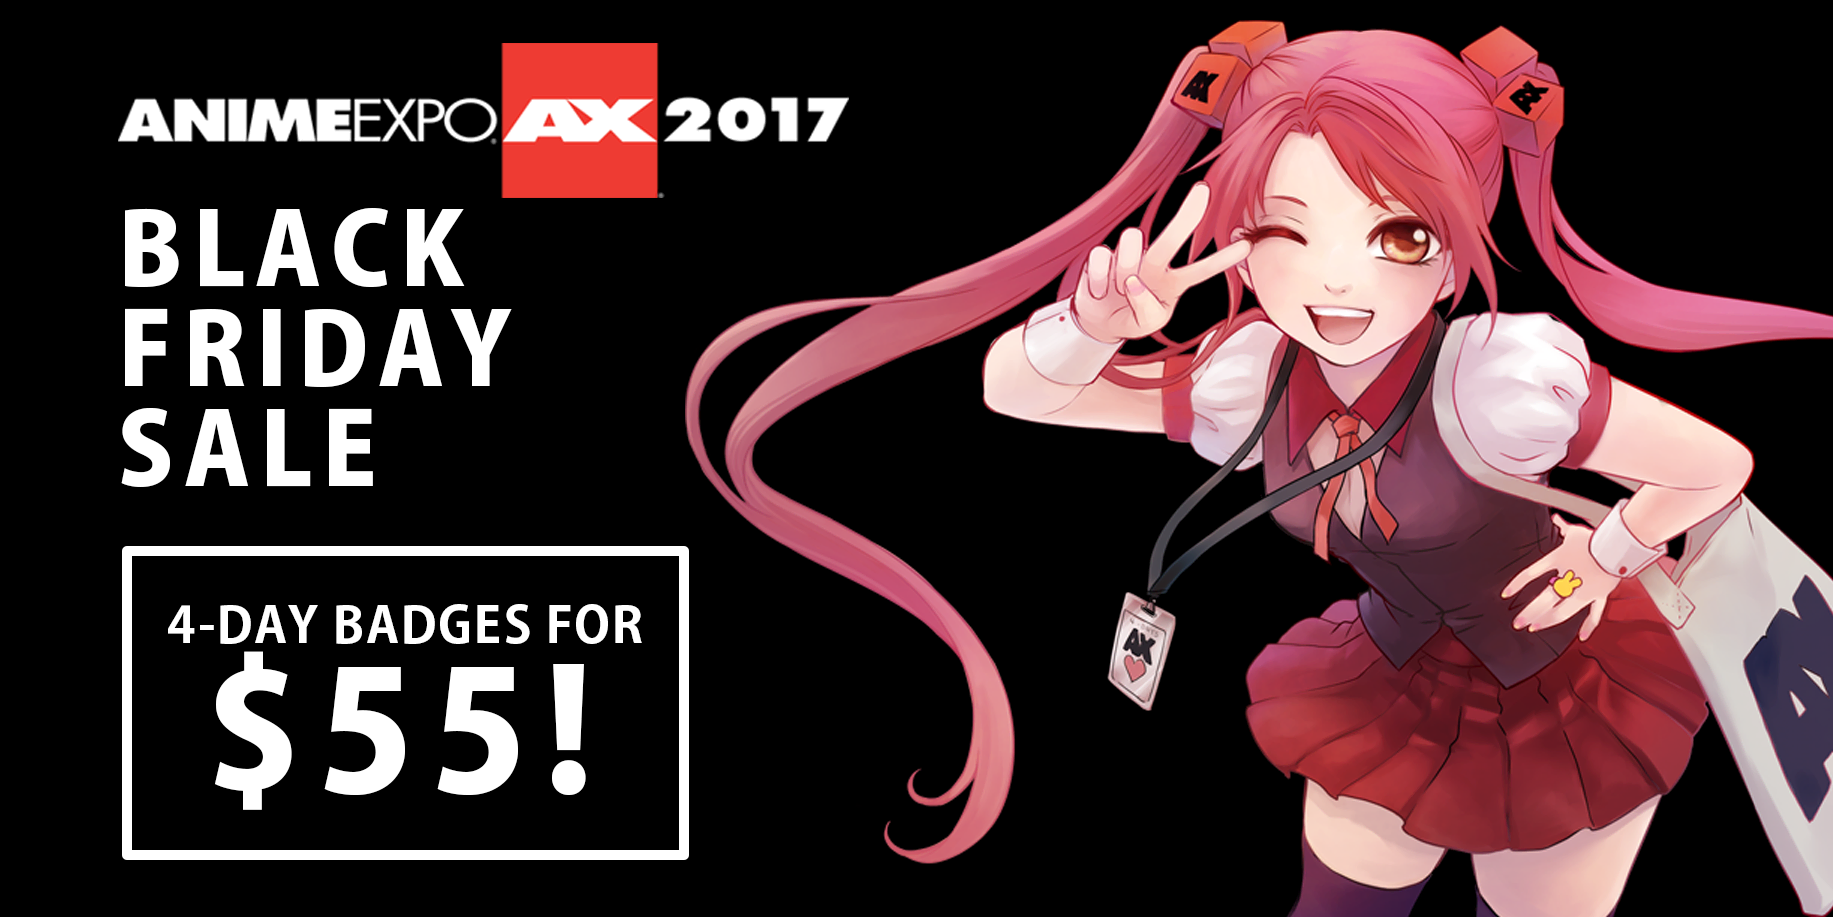 Anime Expo 2015 Discount Code